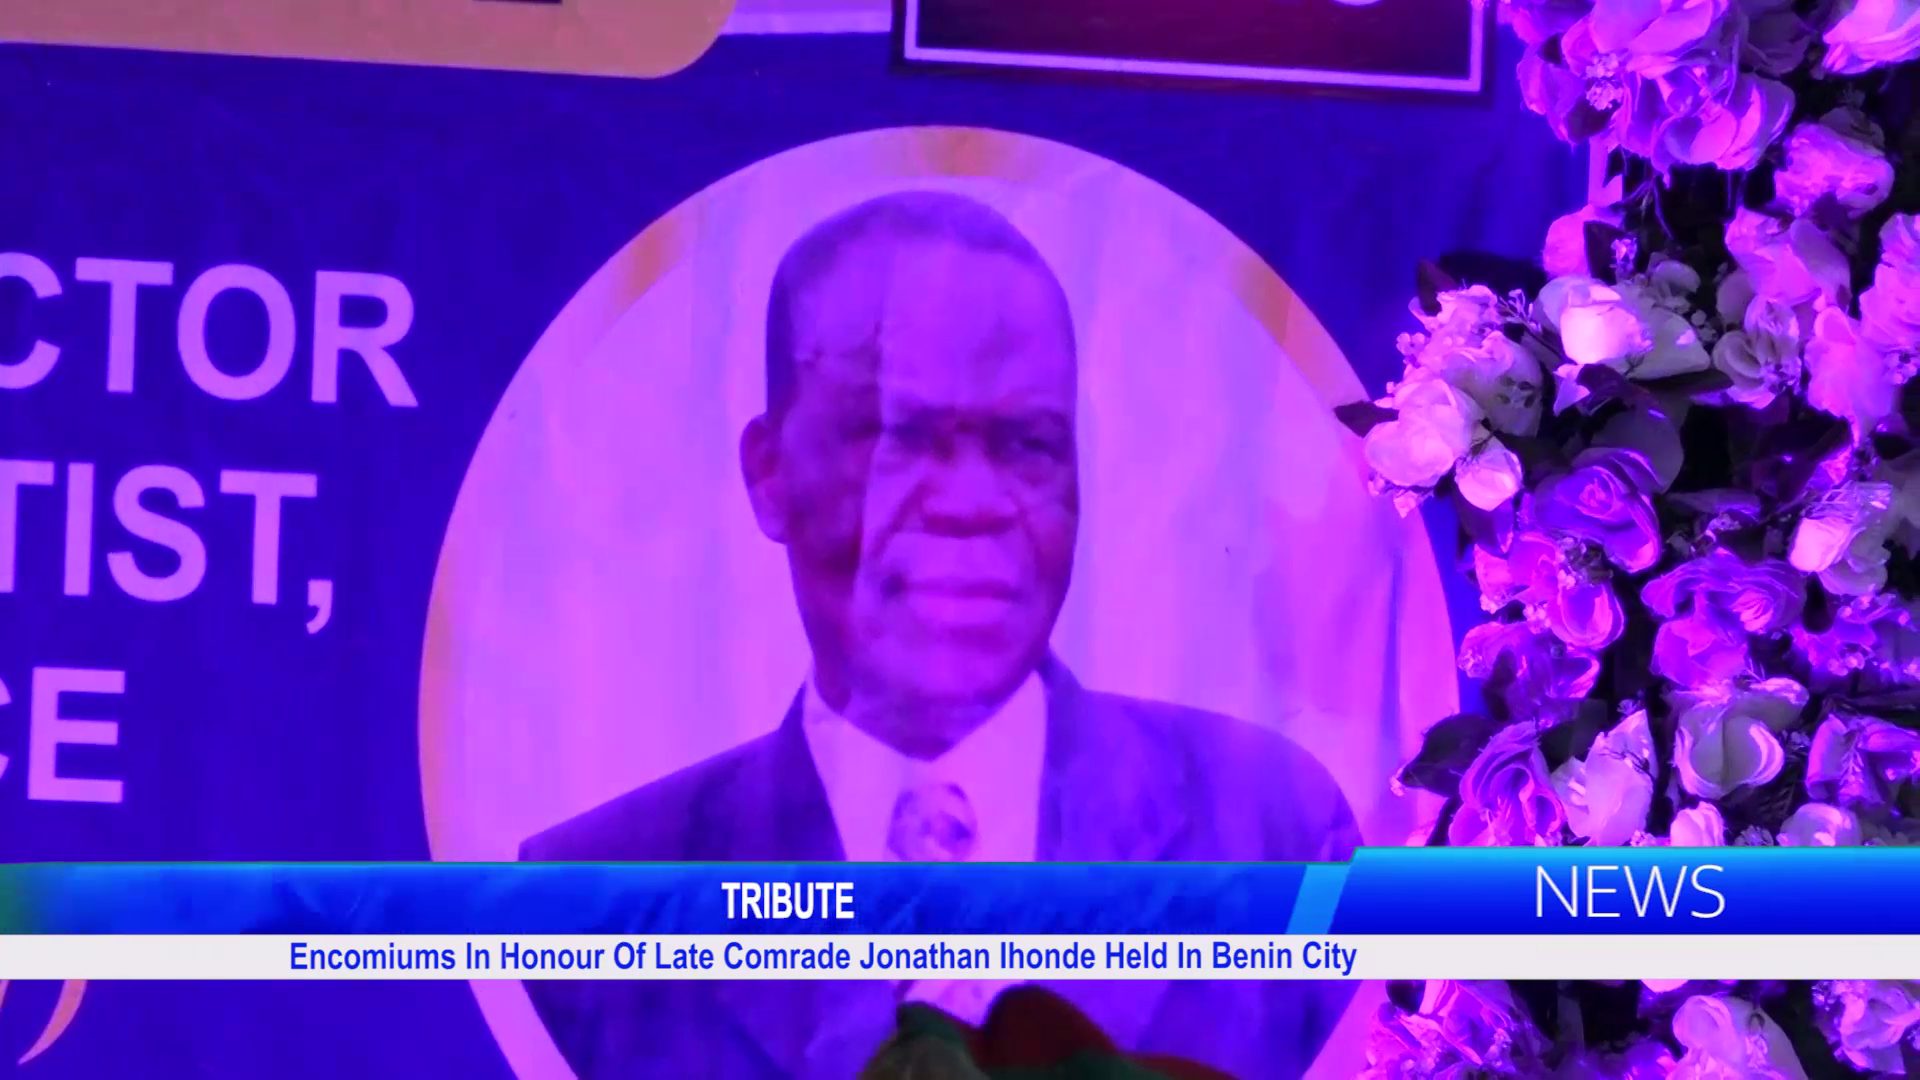 Encomiums In Honour Of Late Comrade Jonathan Ihonde Held In Benin City